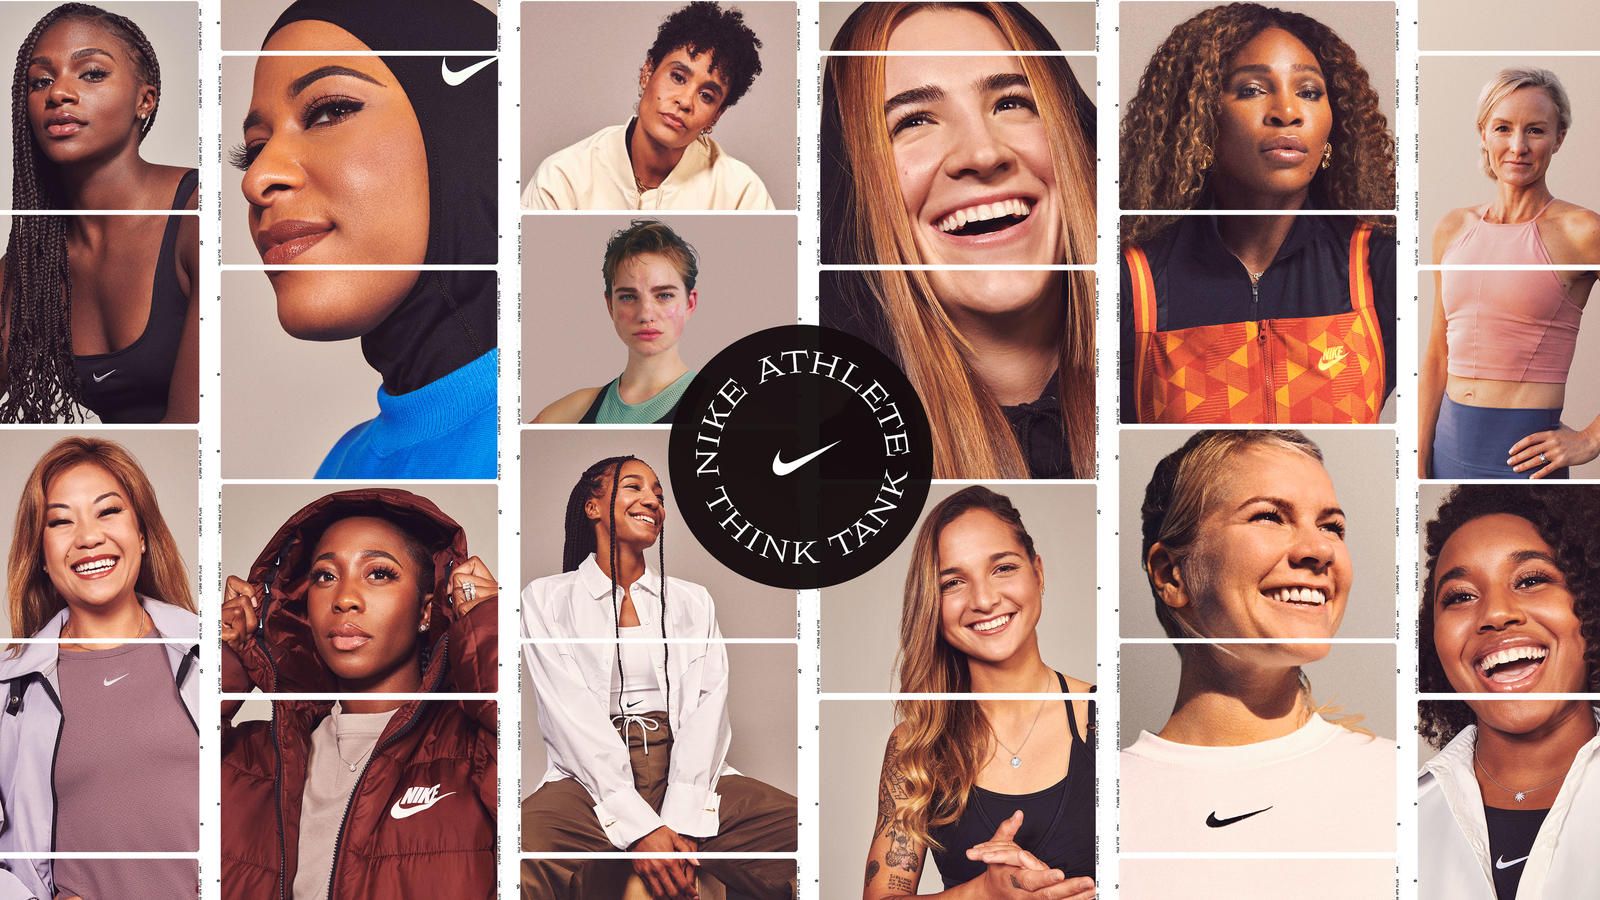 Nike lanza un centrado mujeres atletas